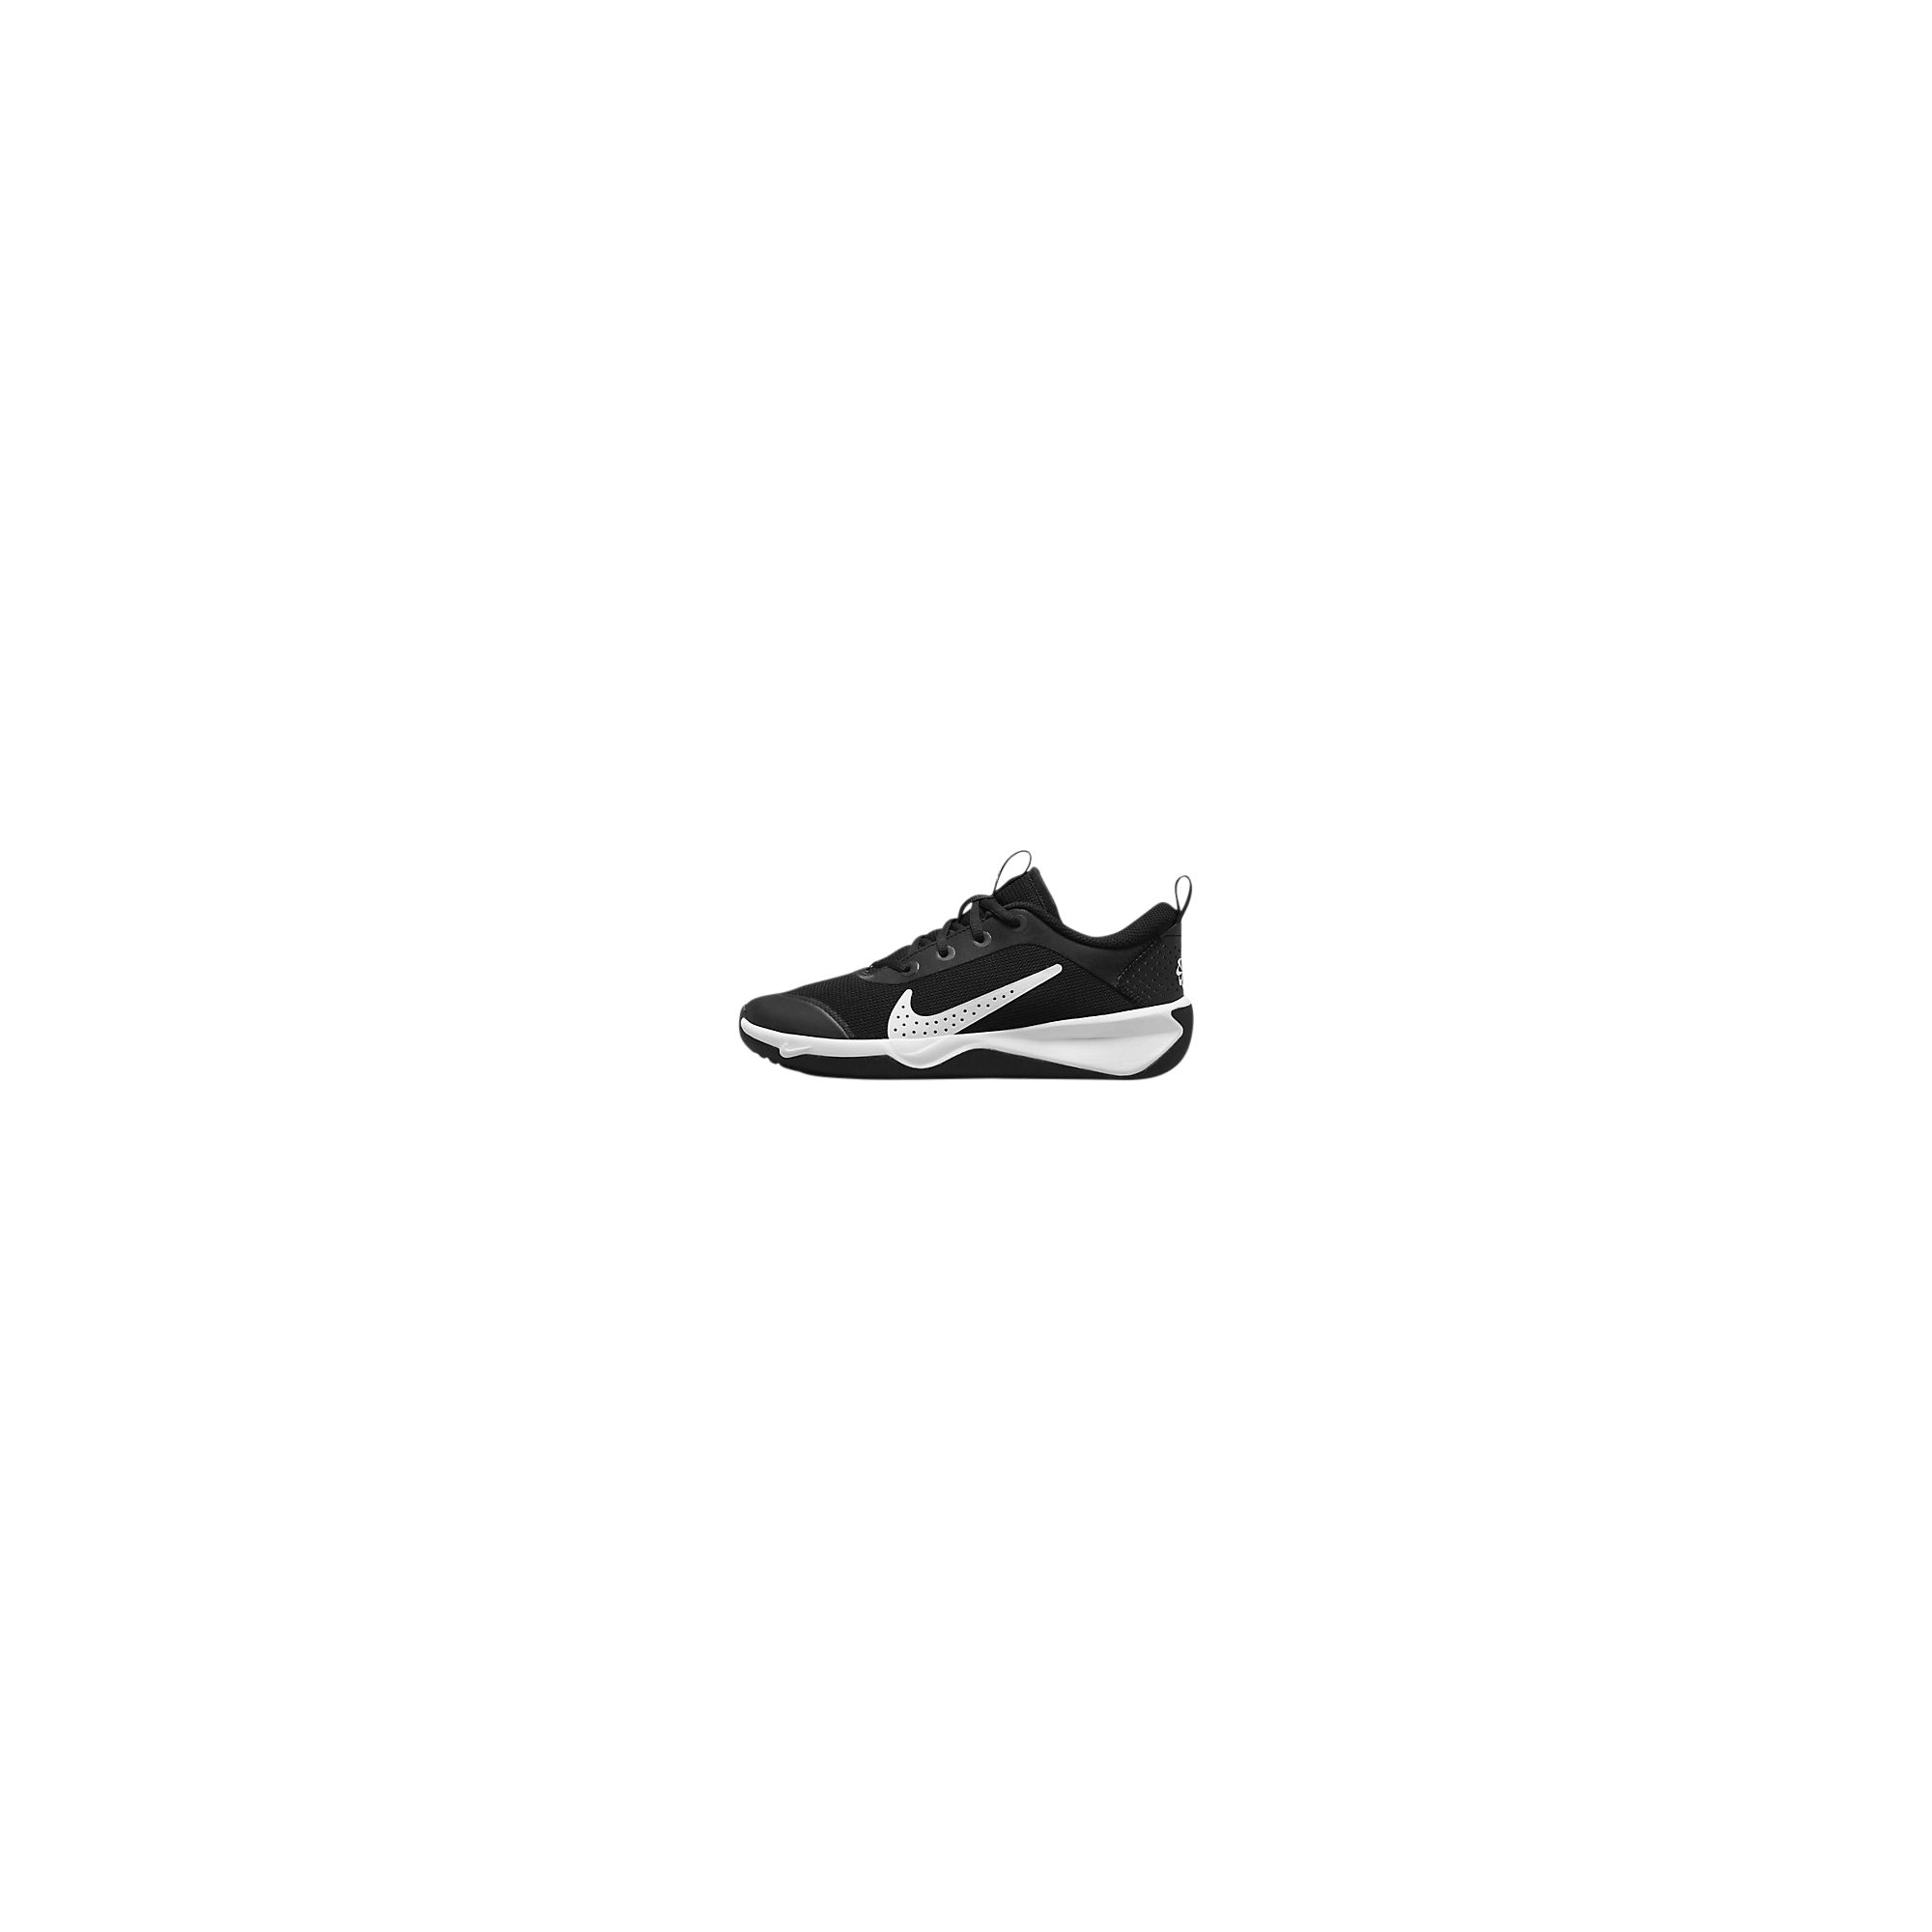 Omni Multi-court Nike - 3252330